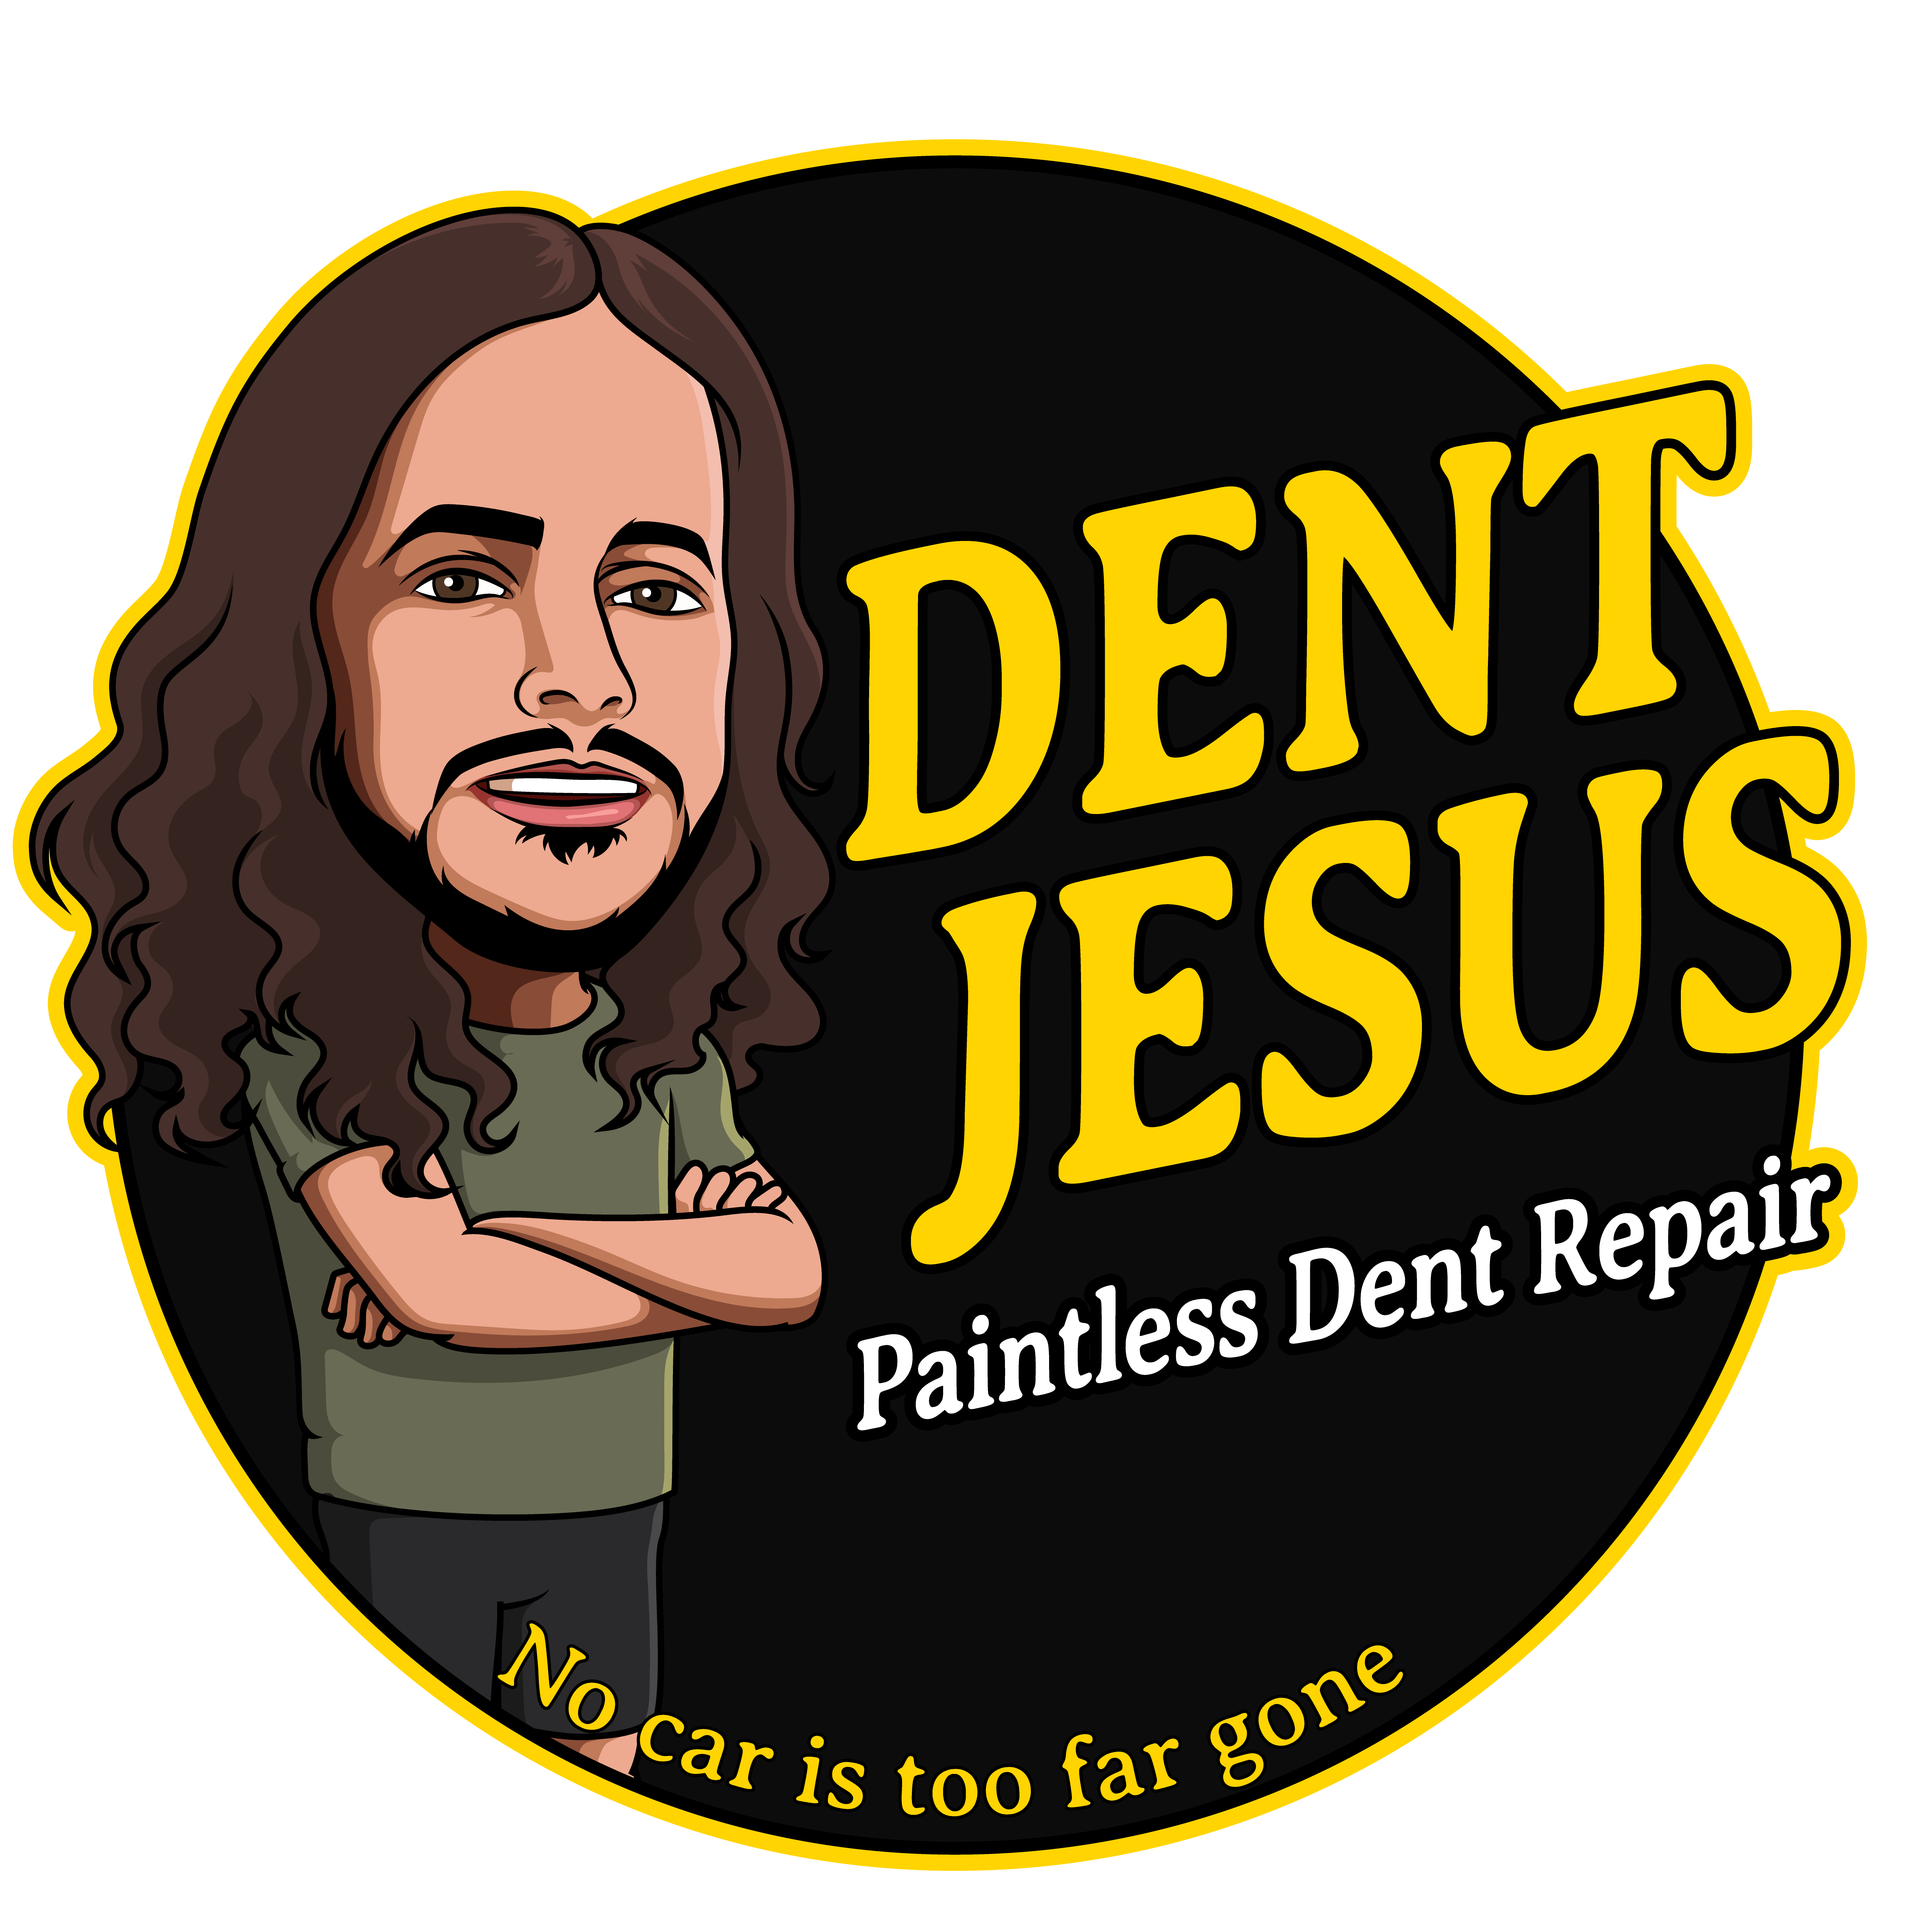 Dent Jesus